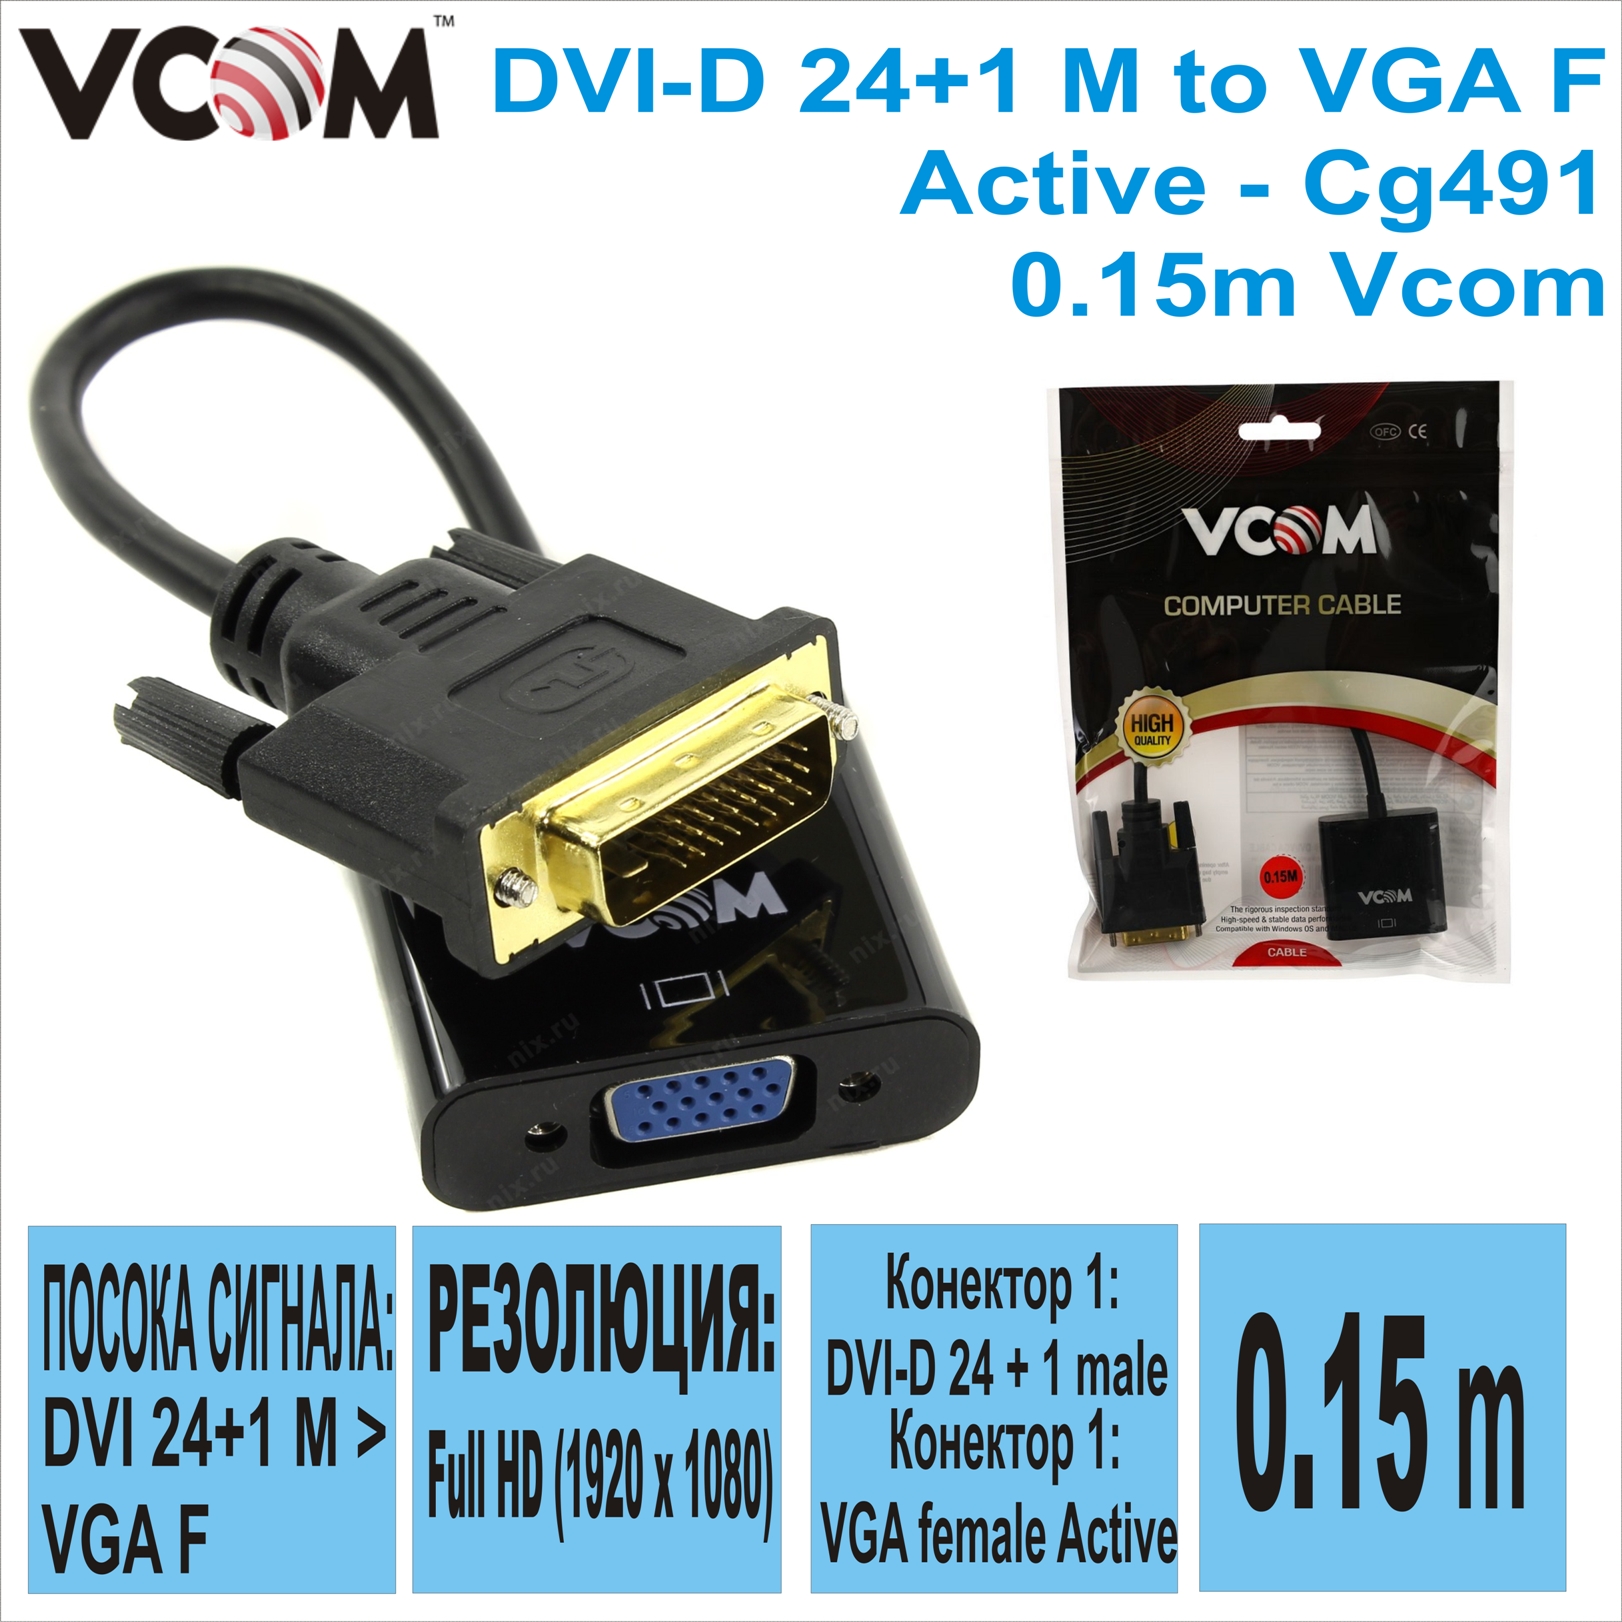 DVI-D 24+1 M to VGA F Active - CG491-0.15m VCom